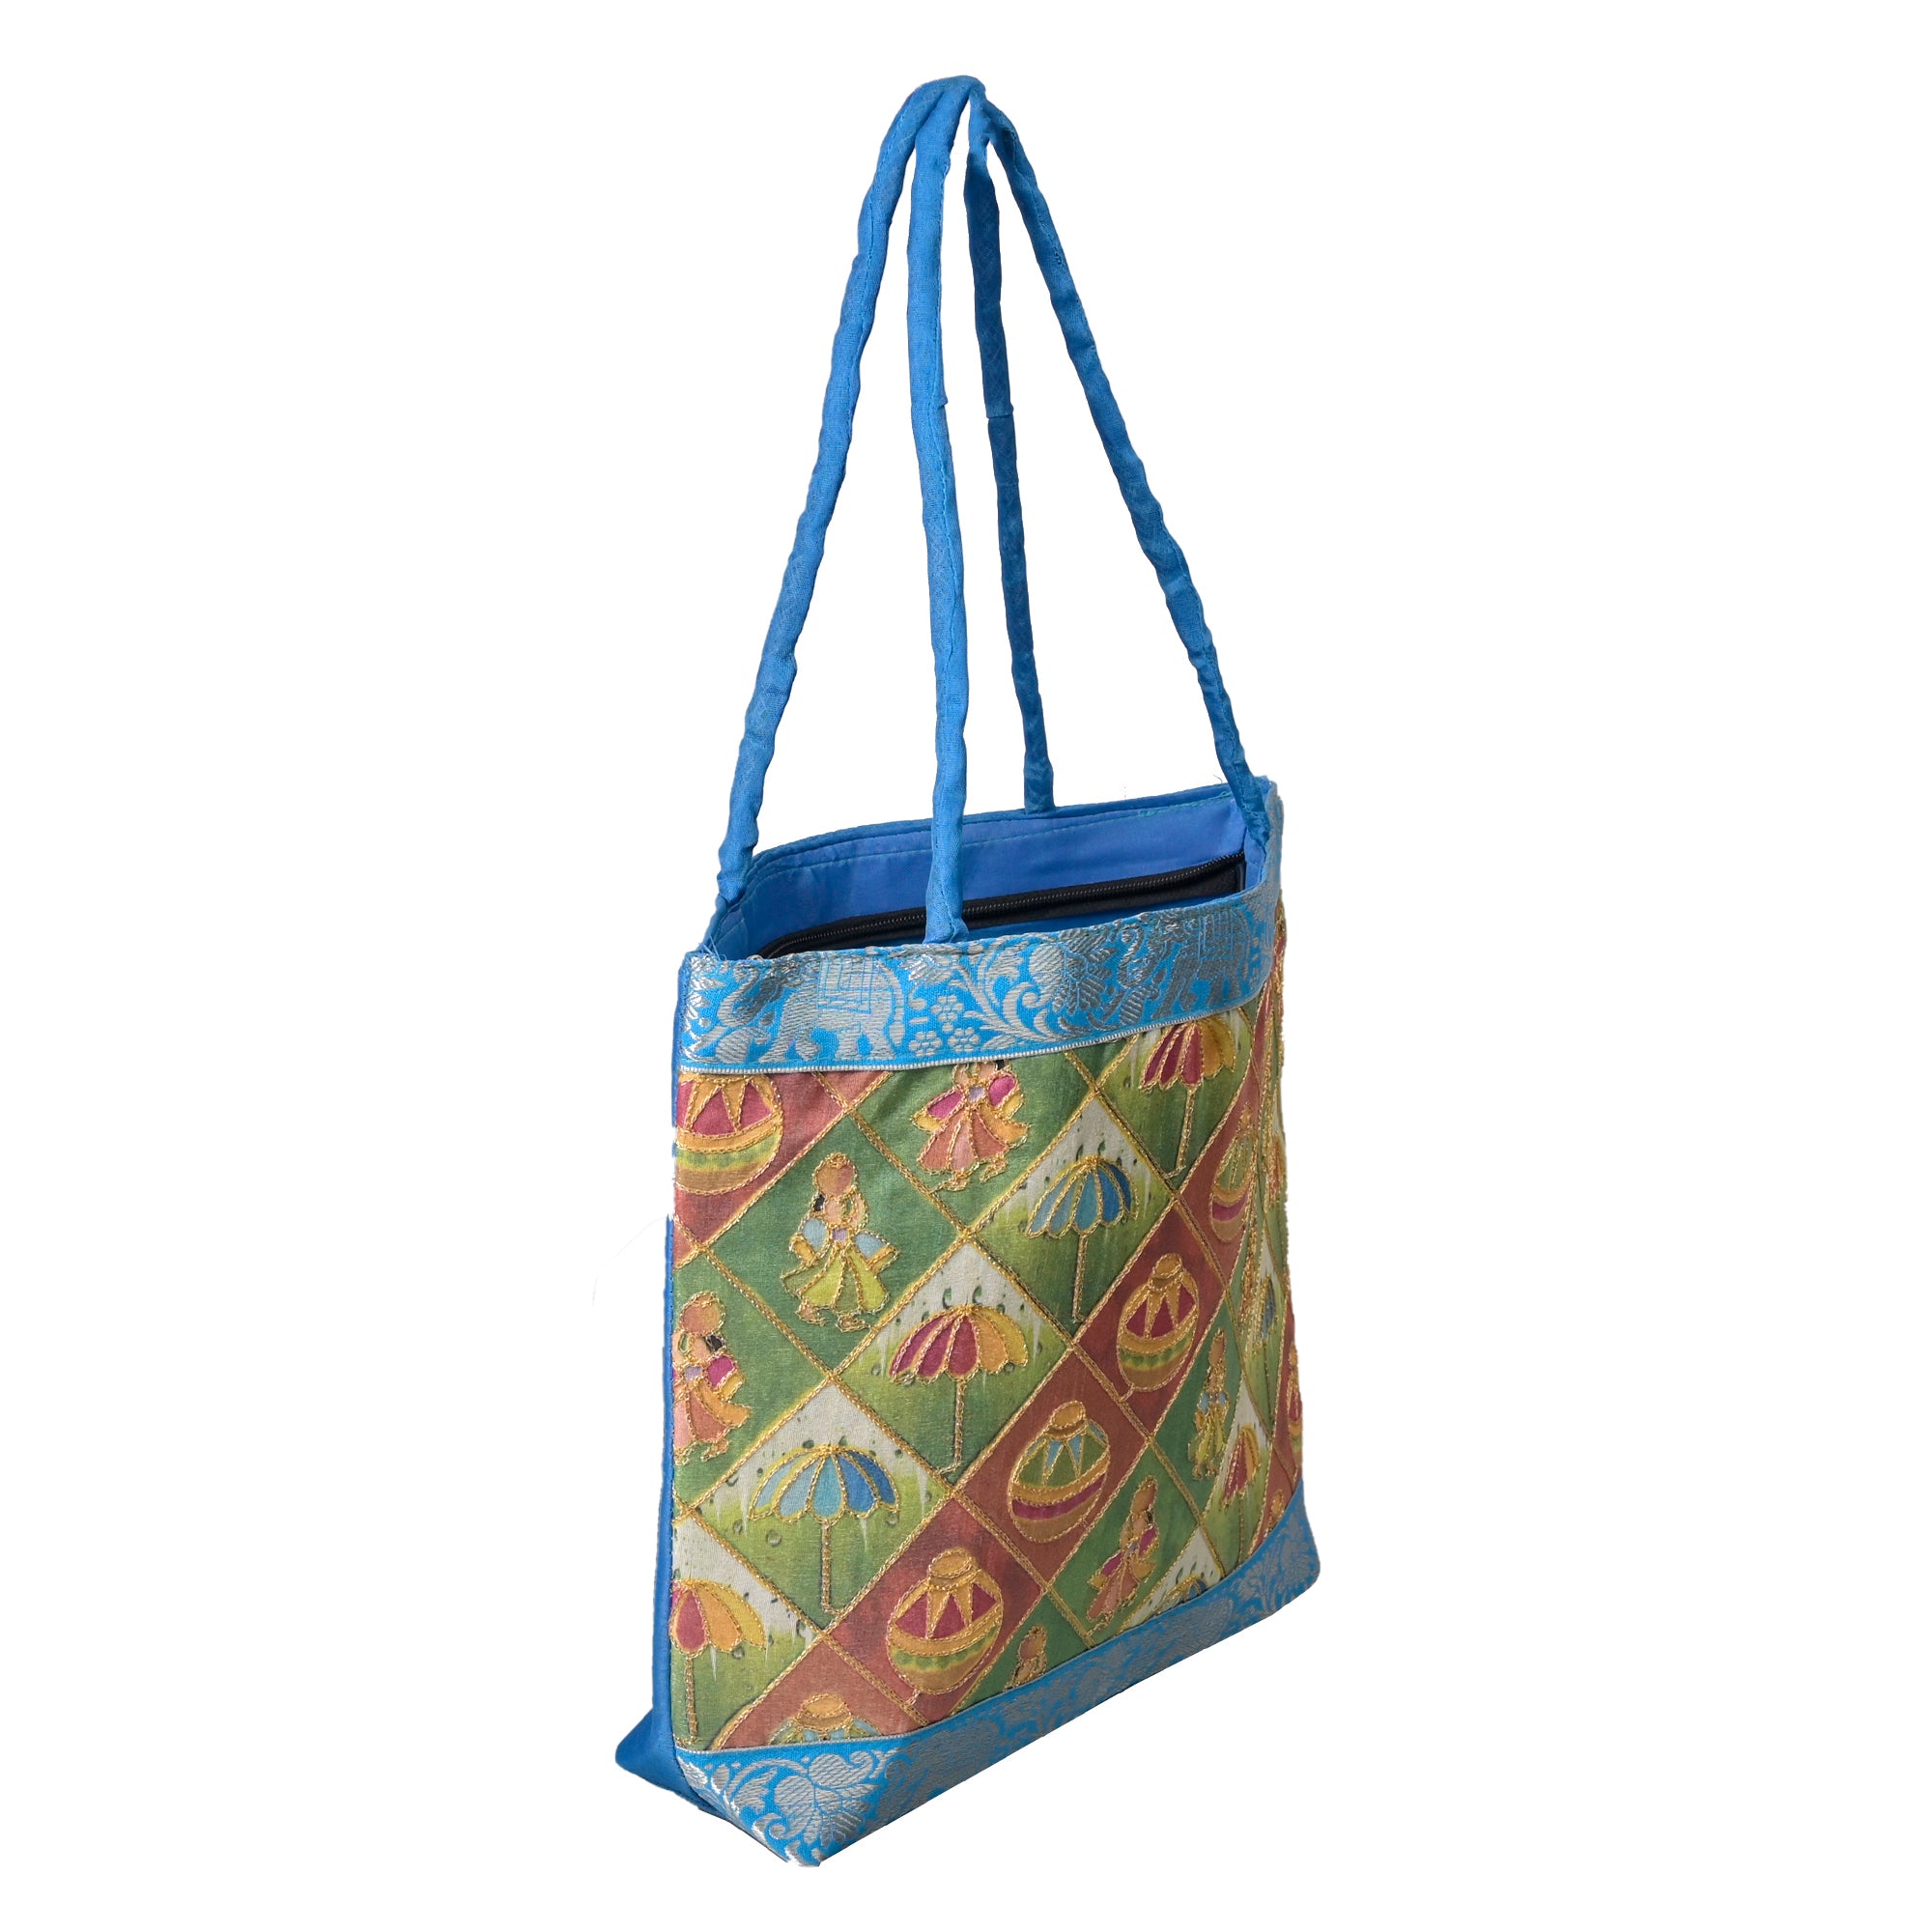 Traditional Rajasthani Embroidery Handbag for Women